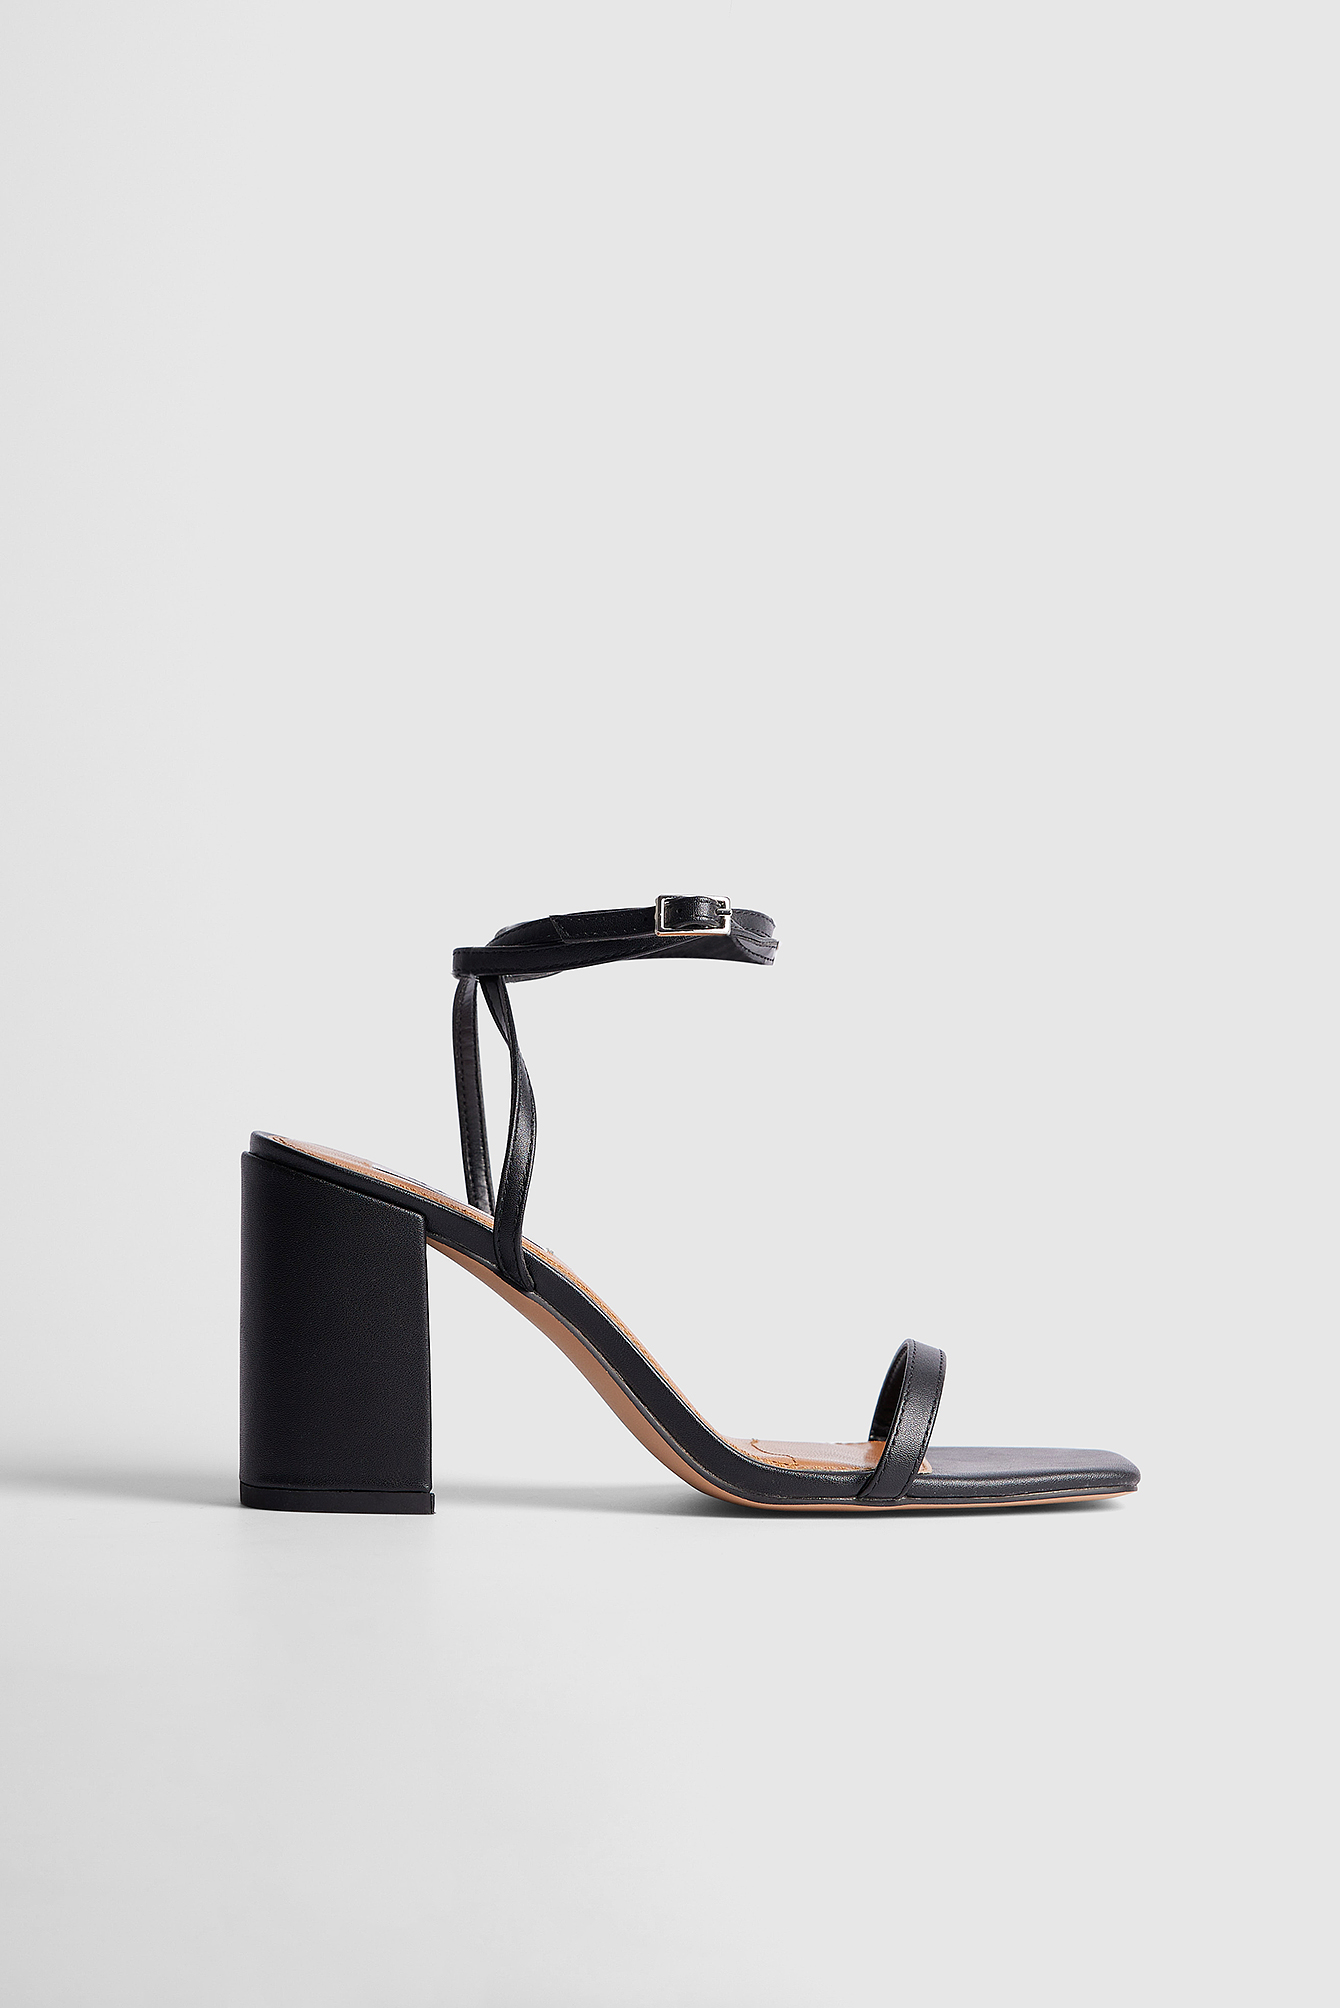 Saks Fifth Avenue Celine Suede Ankle Strap Sandals in Natural | Lyst